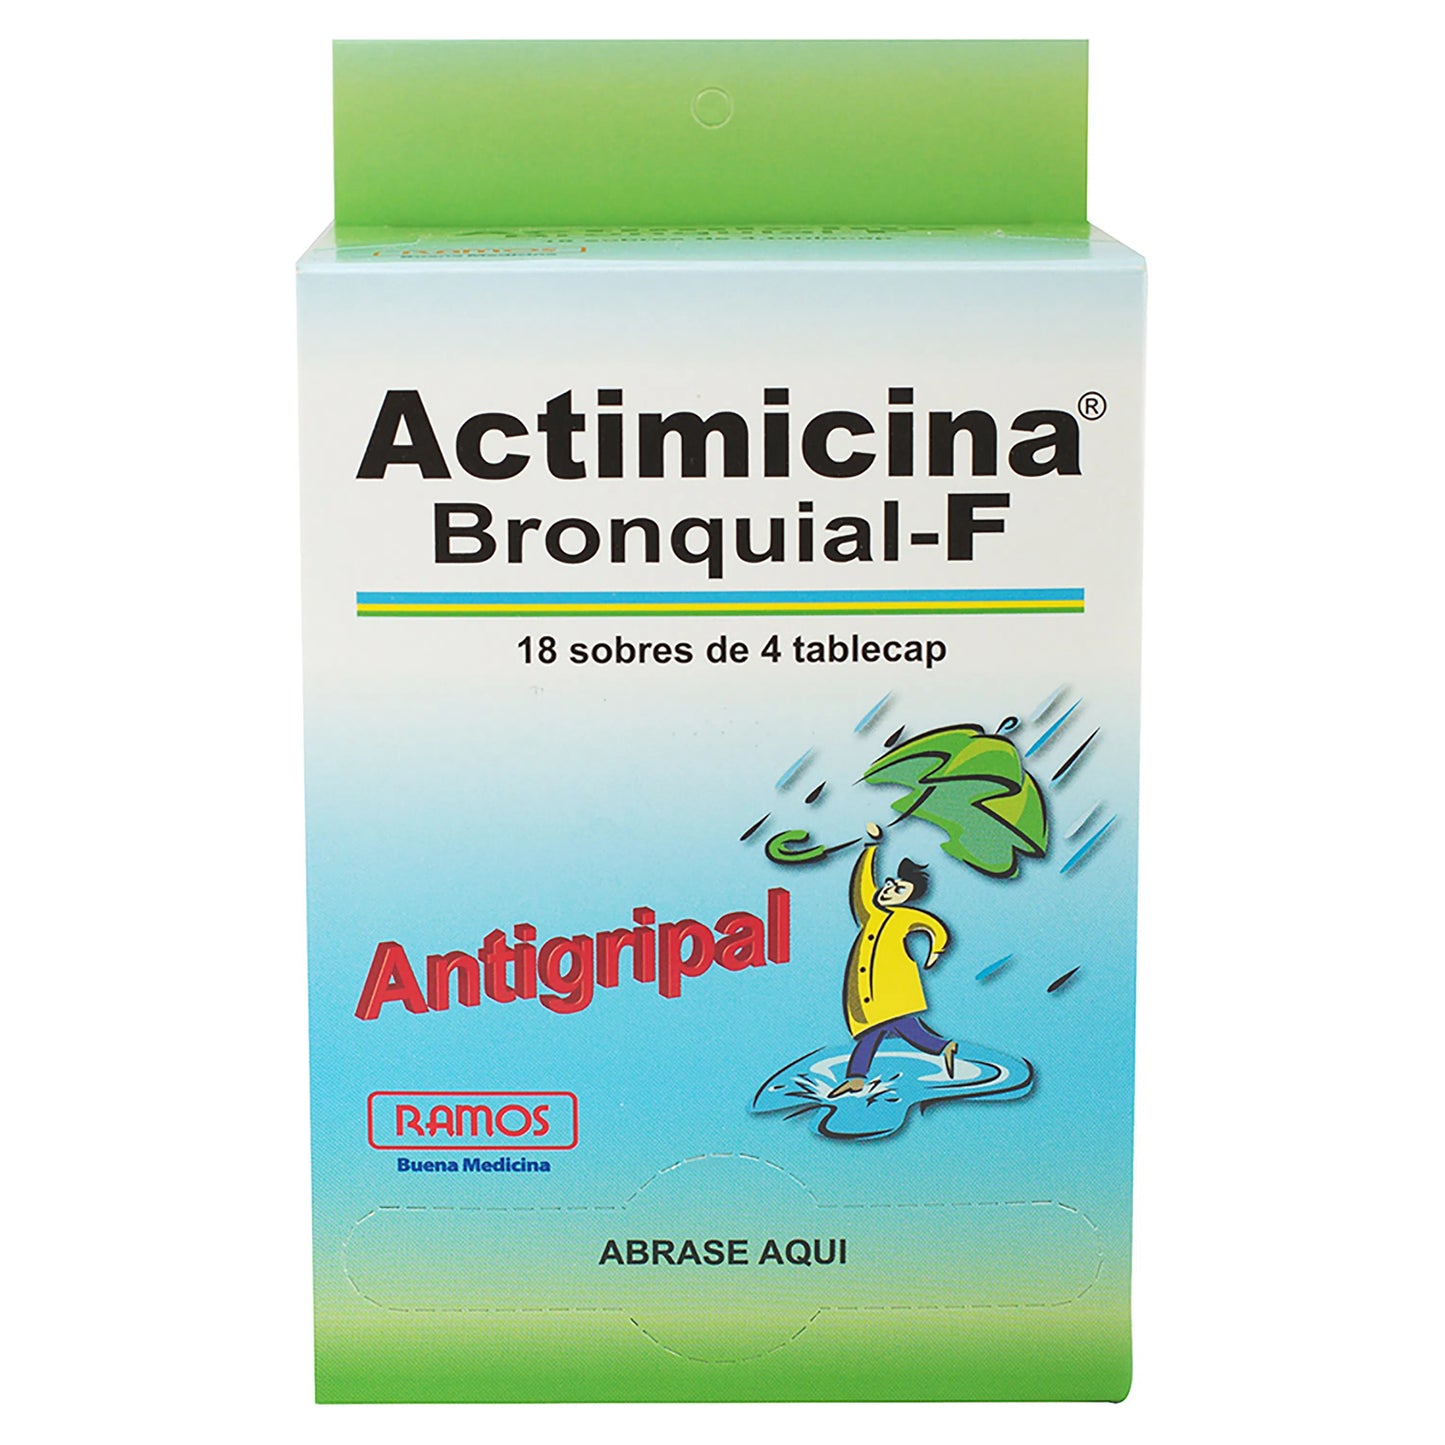 Actimicina Bronquial